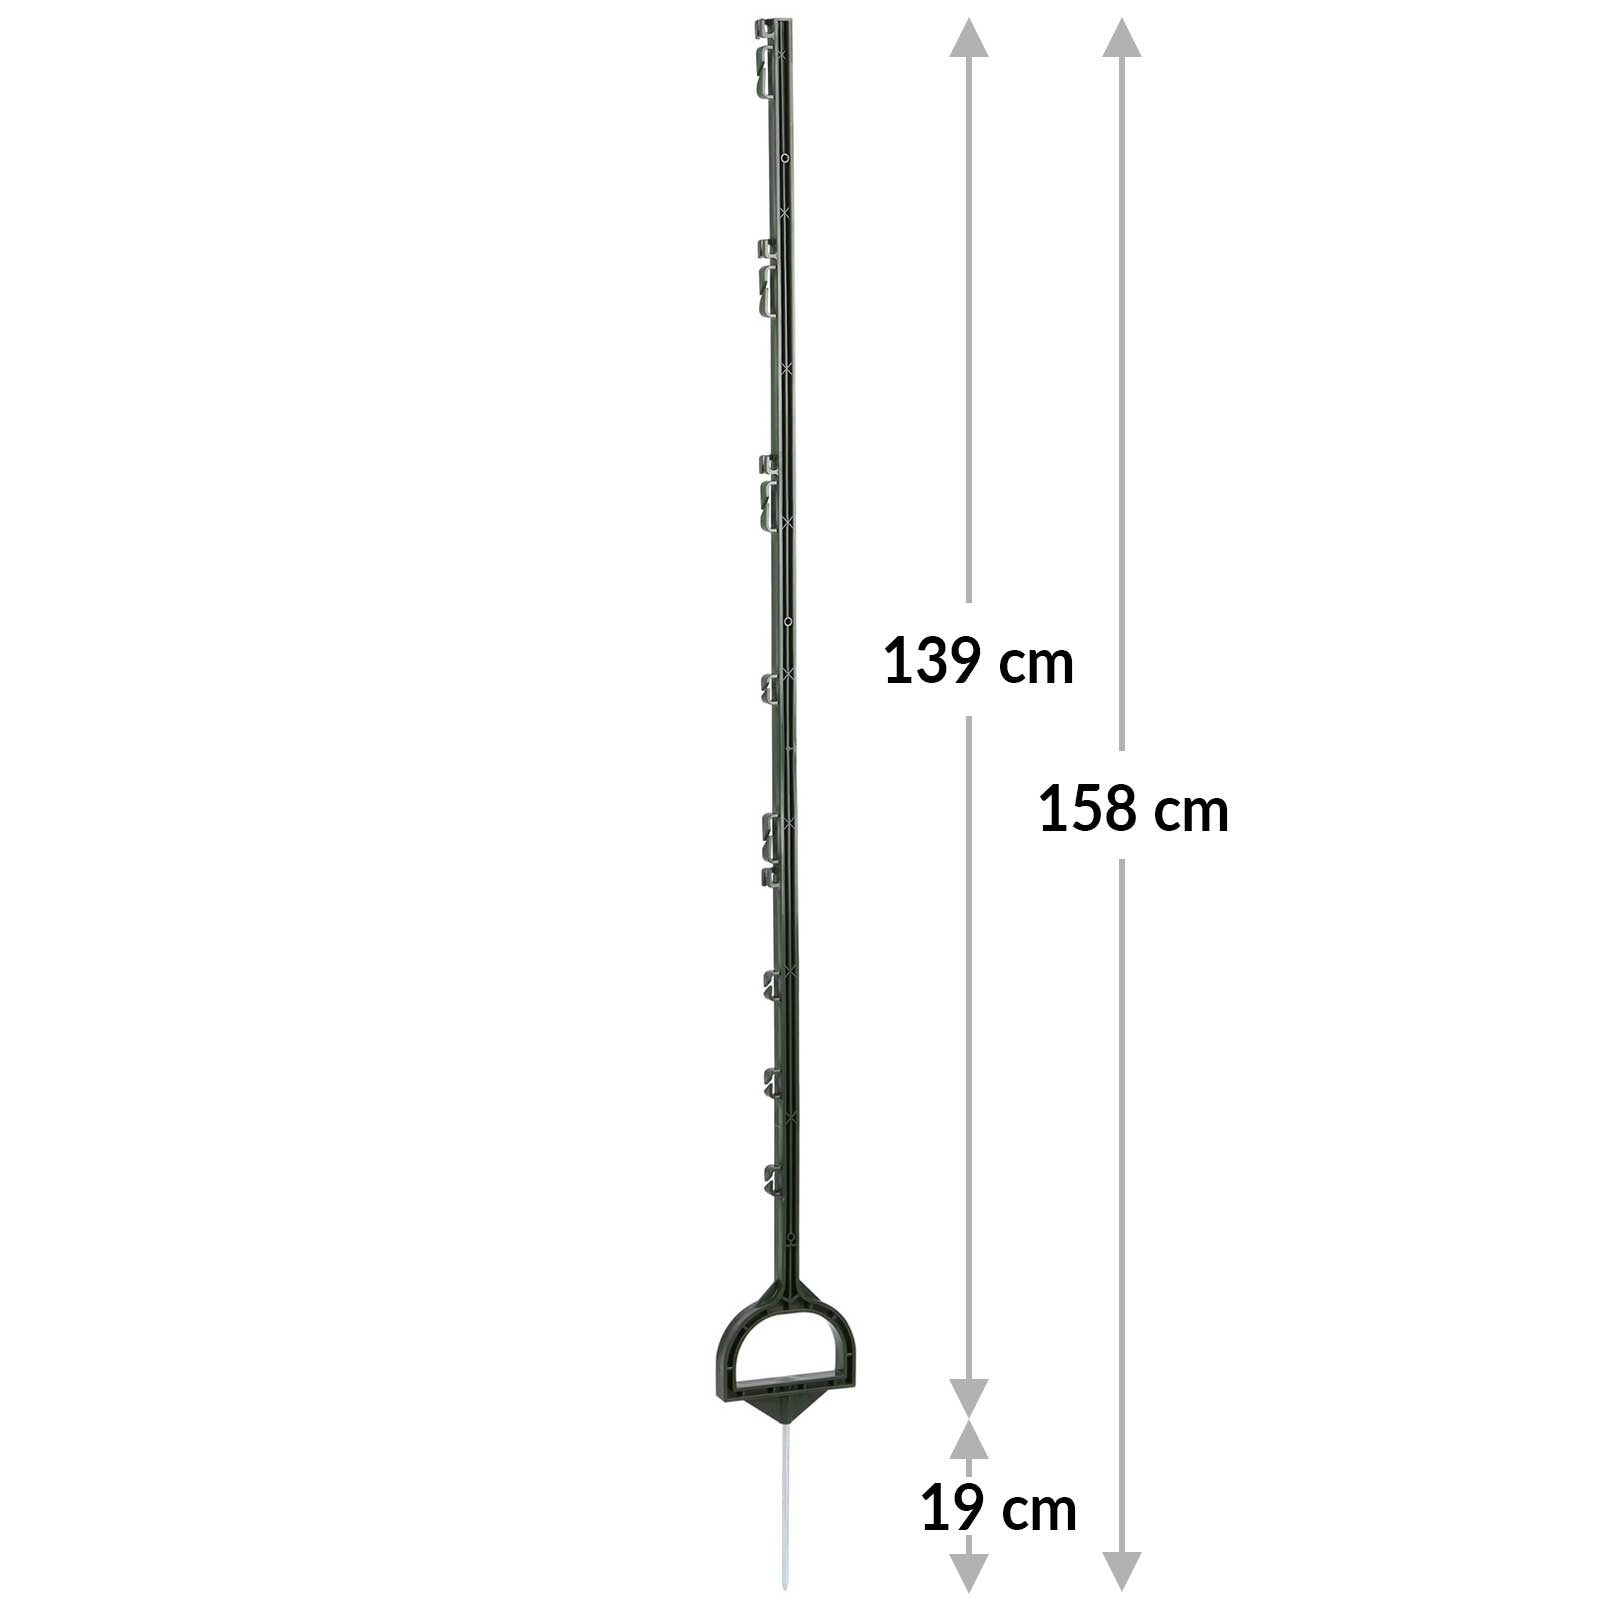 5x Plaststolpe 158cm grön